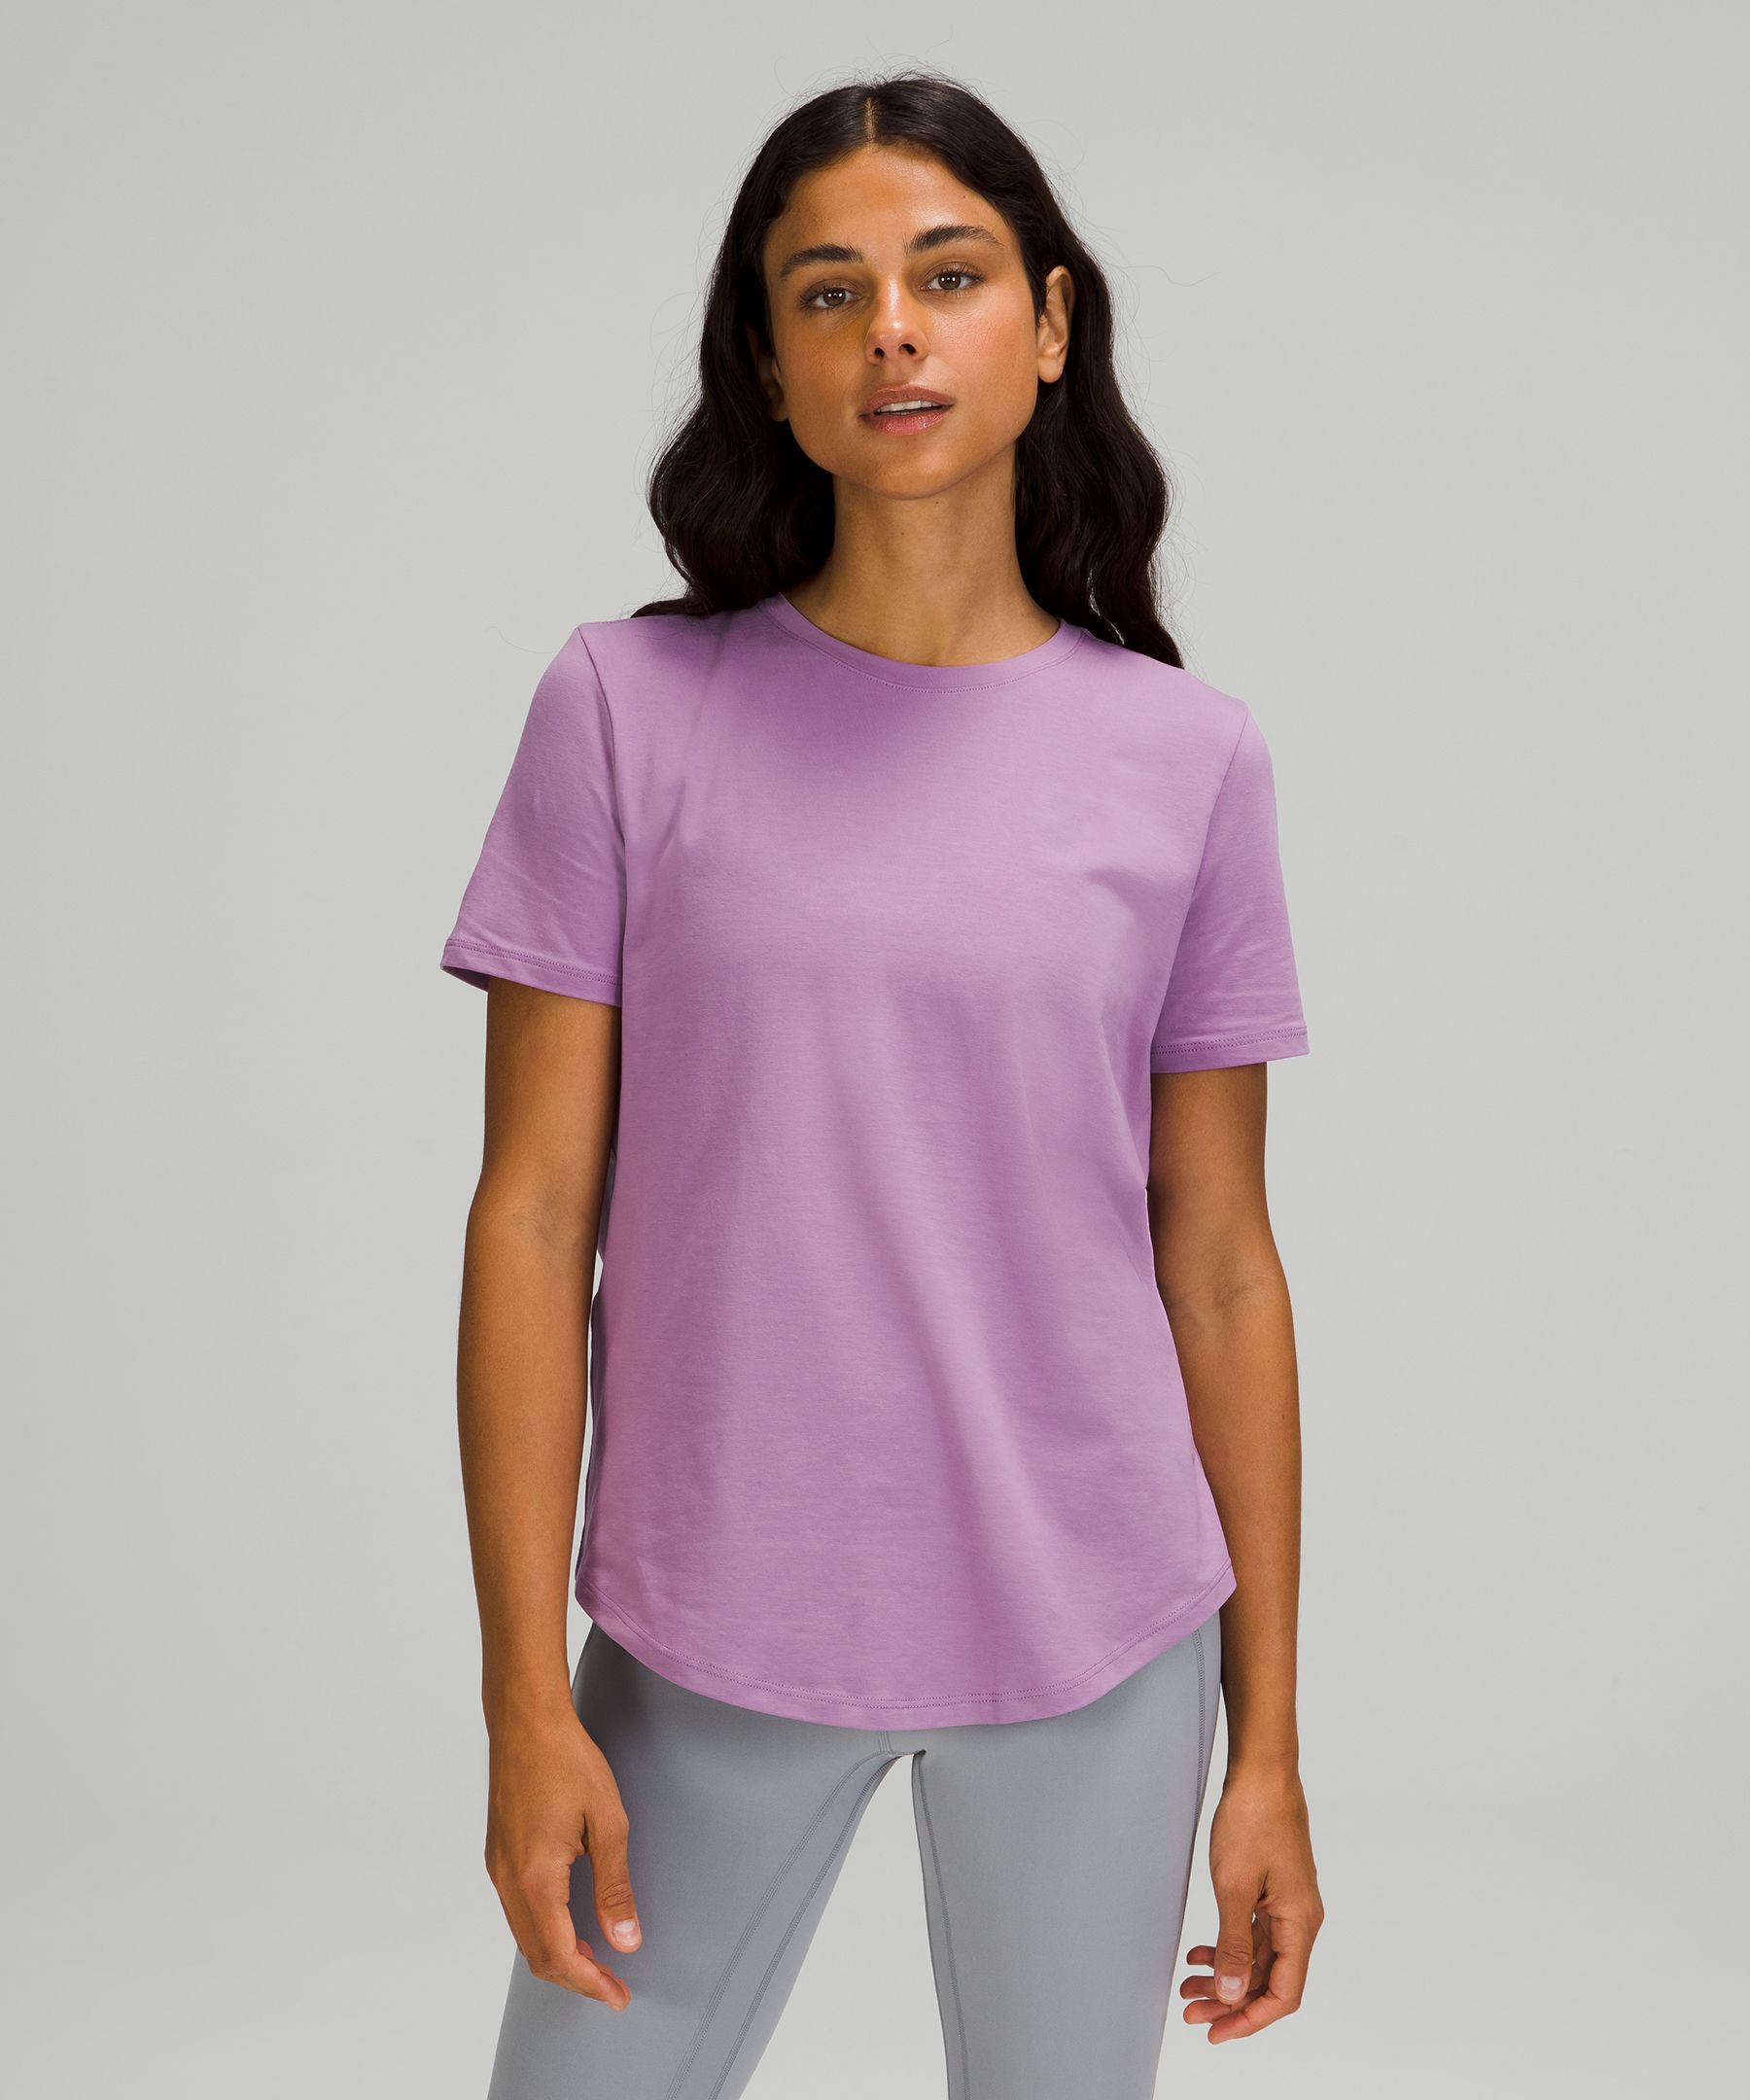 Lululemon Love Crew Short Sleeve Shirt T-shirt In Wisteria Purple